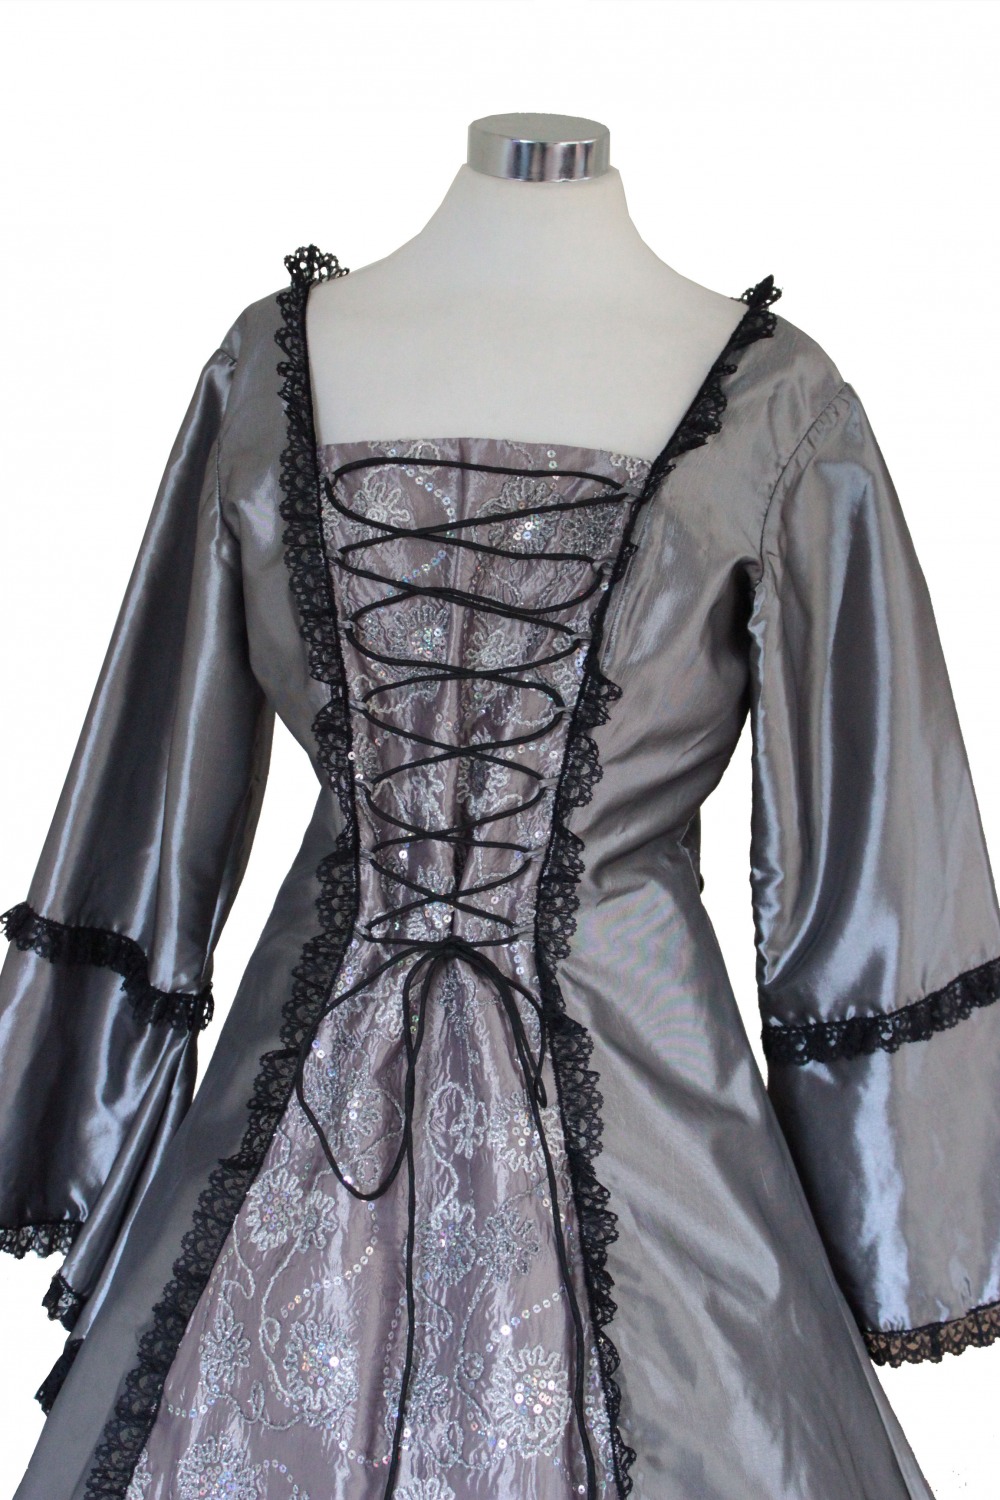 Ladies Medieval Renaissance Tudor Costume Size 12 - 14 Image